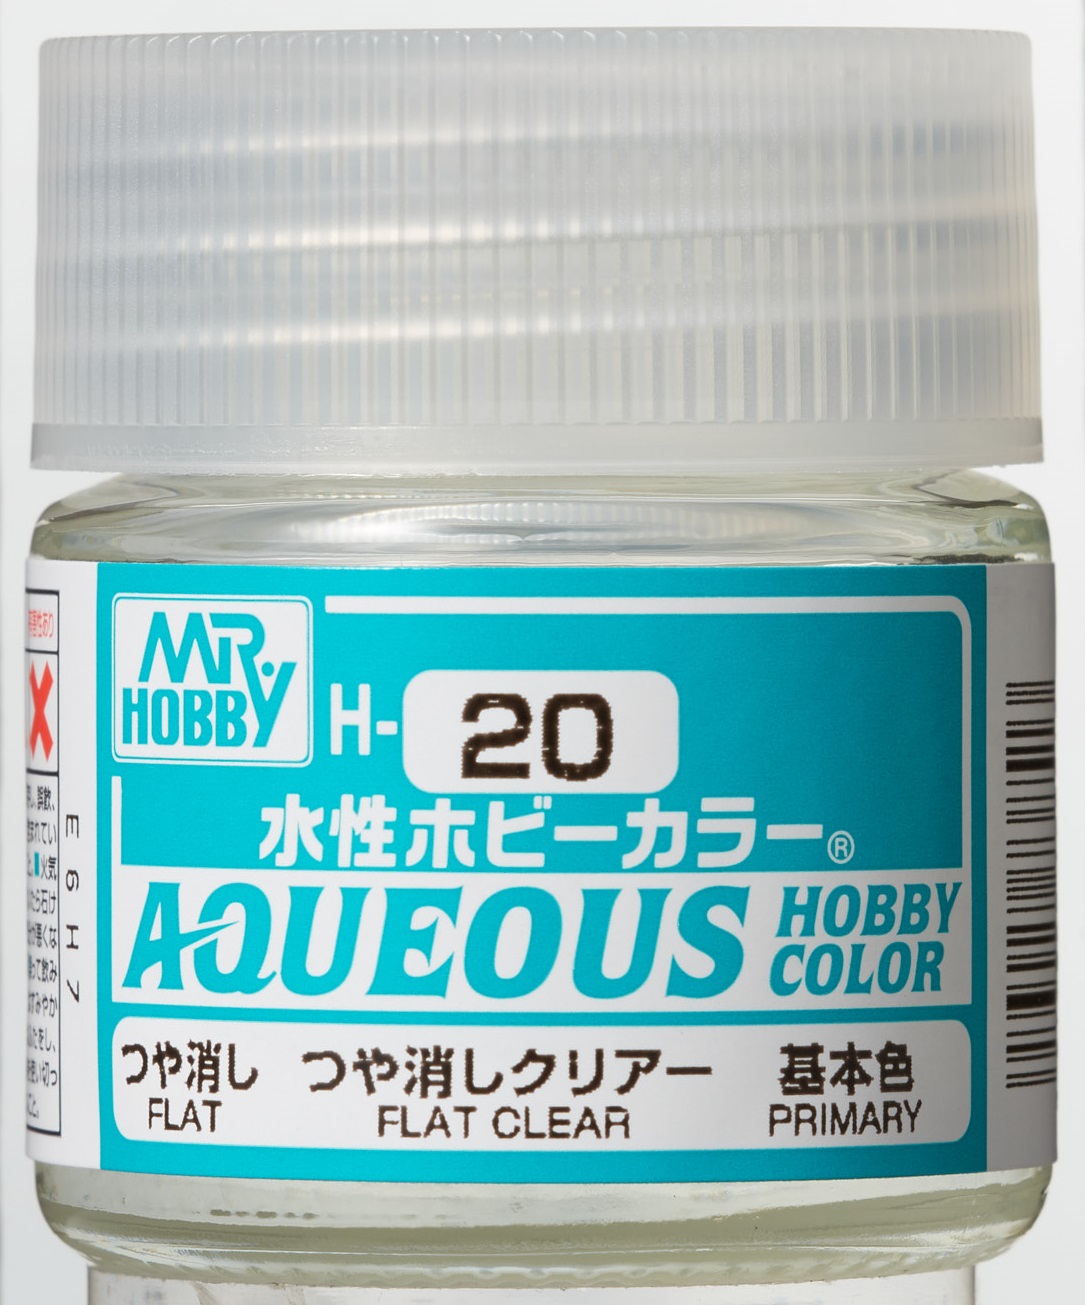 Mr. Aqueous Hobby Color - Flat Clear - H20 - Mattes Klarlack 